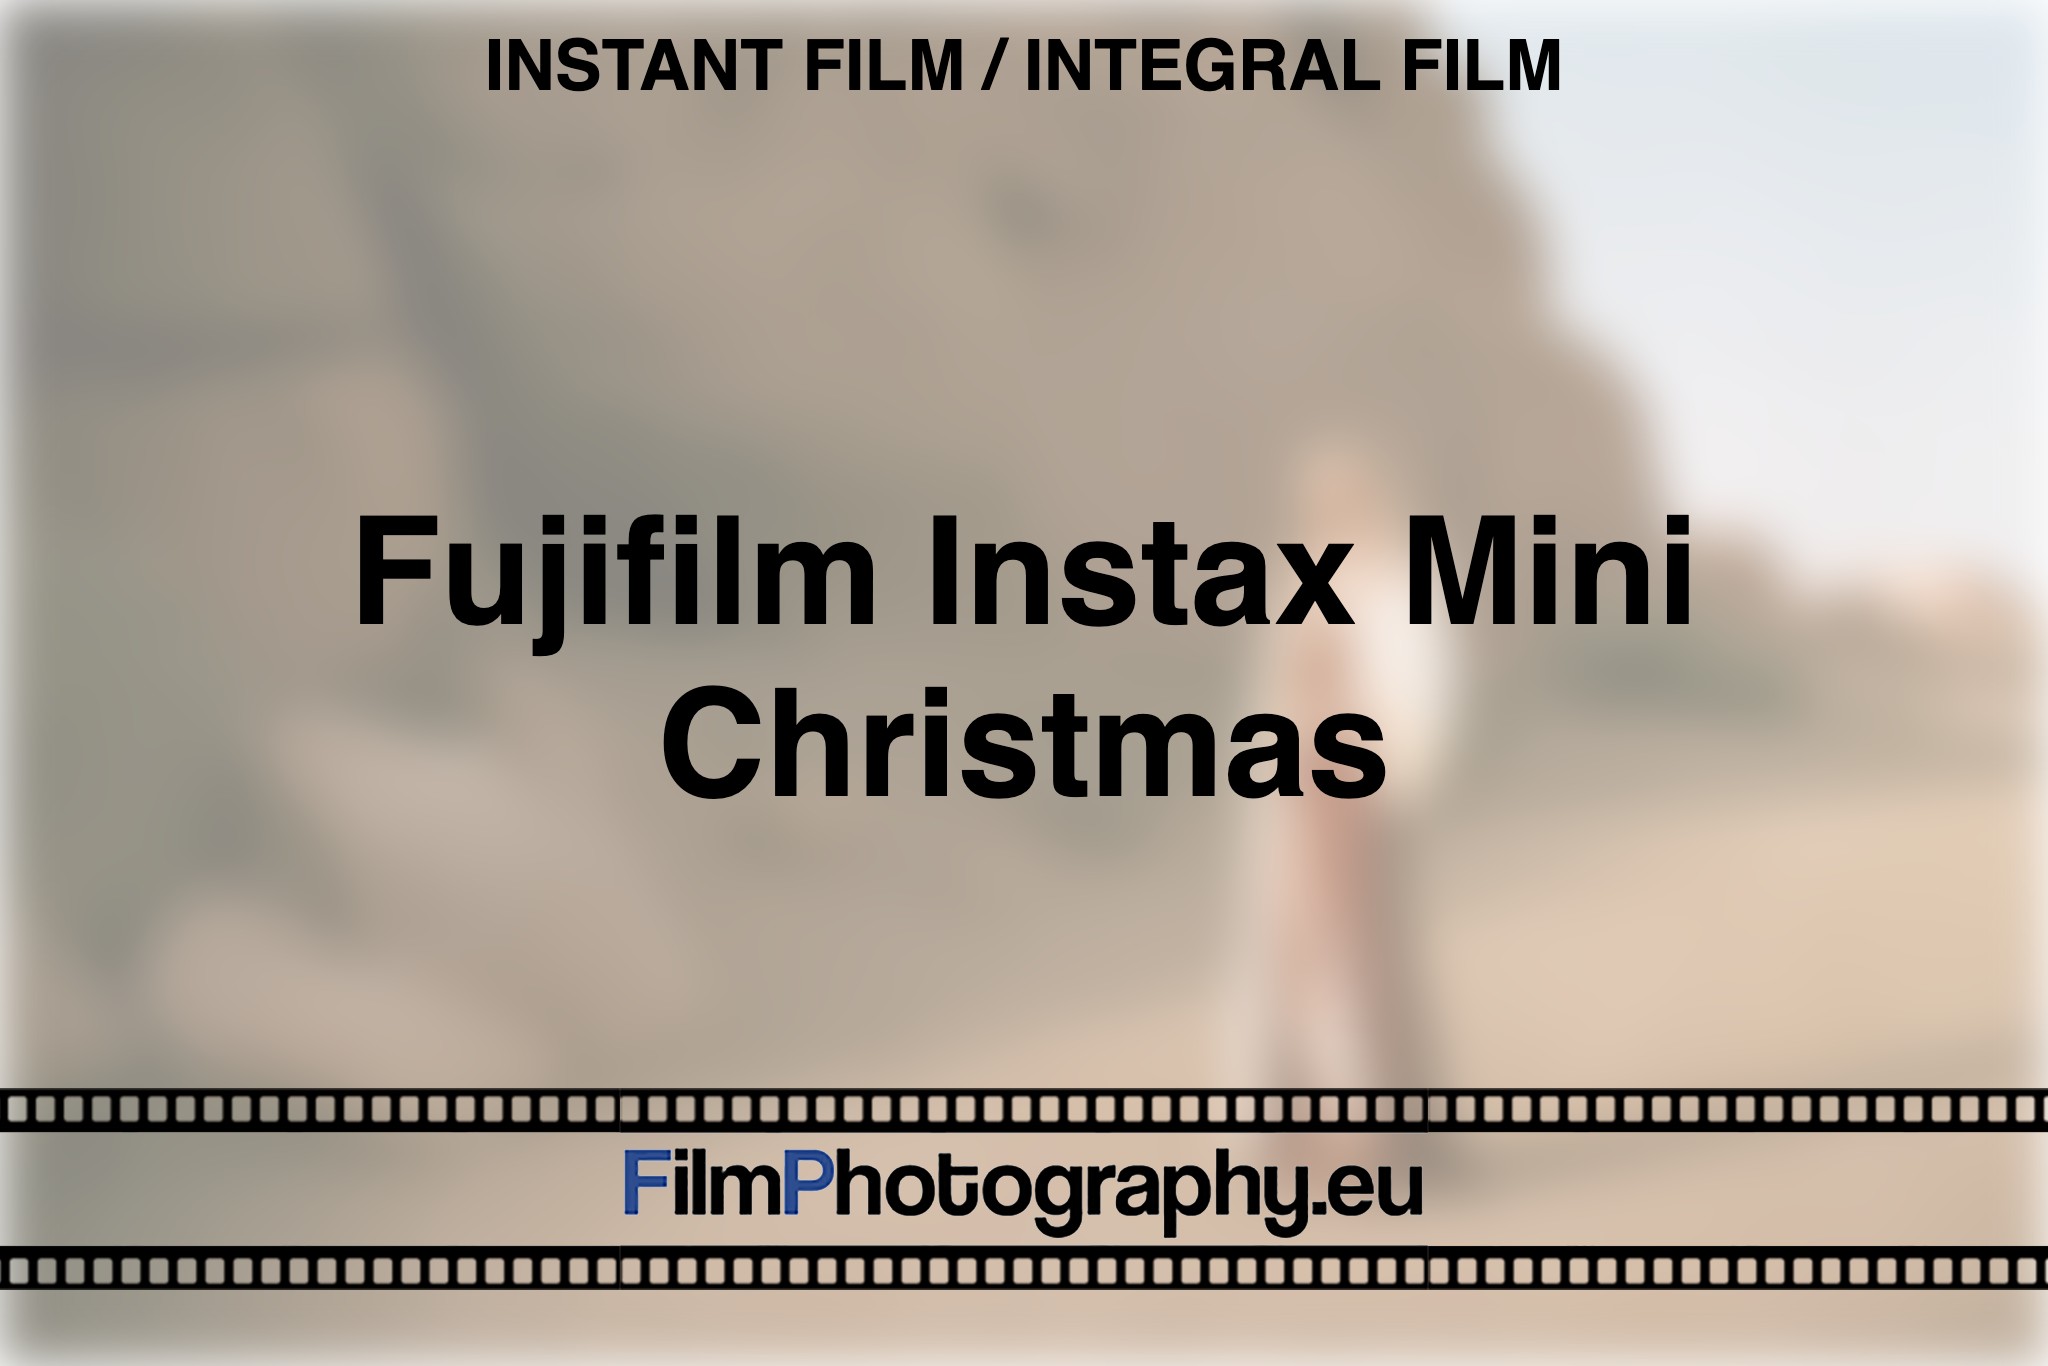 fujifilm-instax-mini-christmas-instant-film-integral-film-bnv